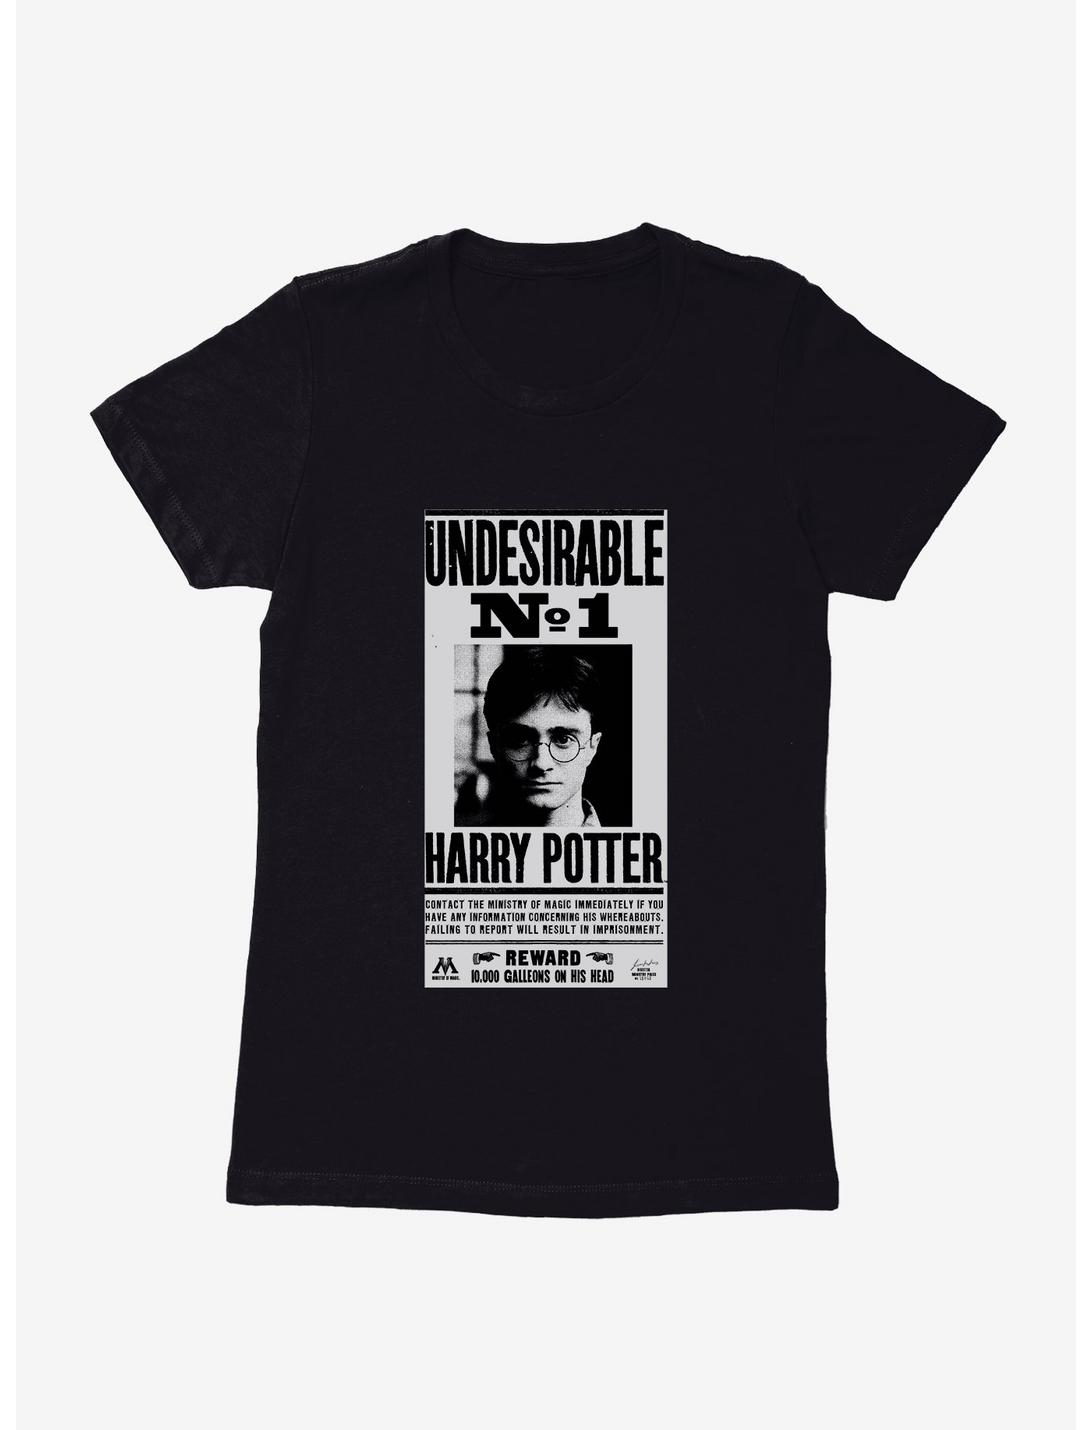 Harry Potter Undesirable No 1 Warrant Womens T-Shirt, , hi-res